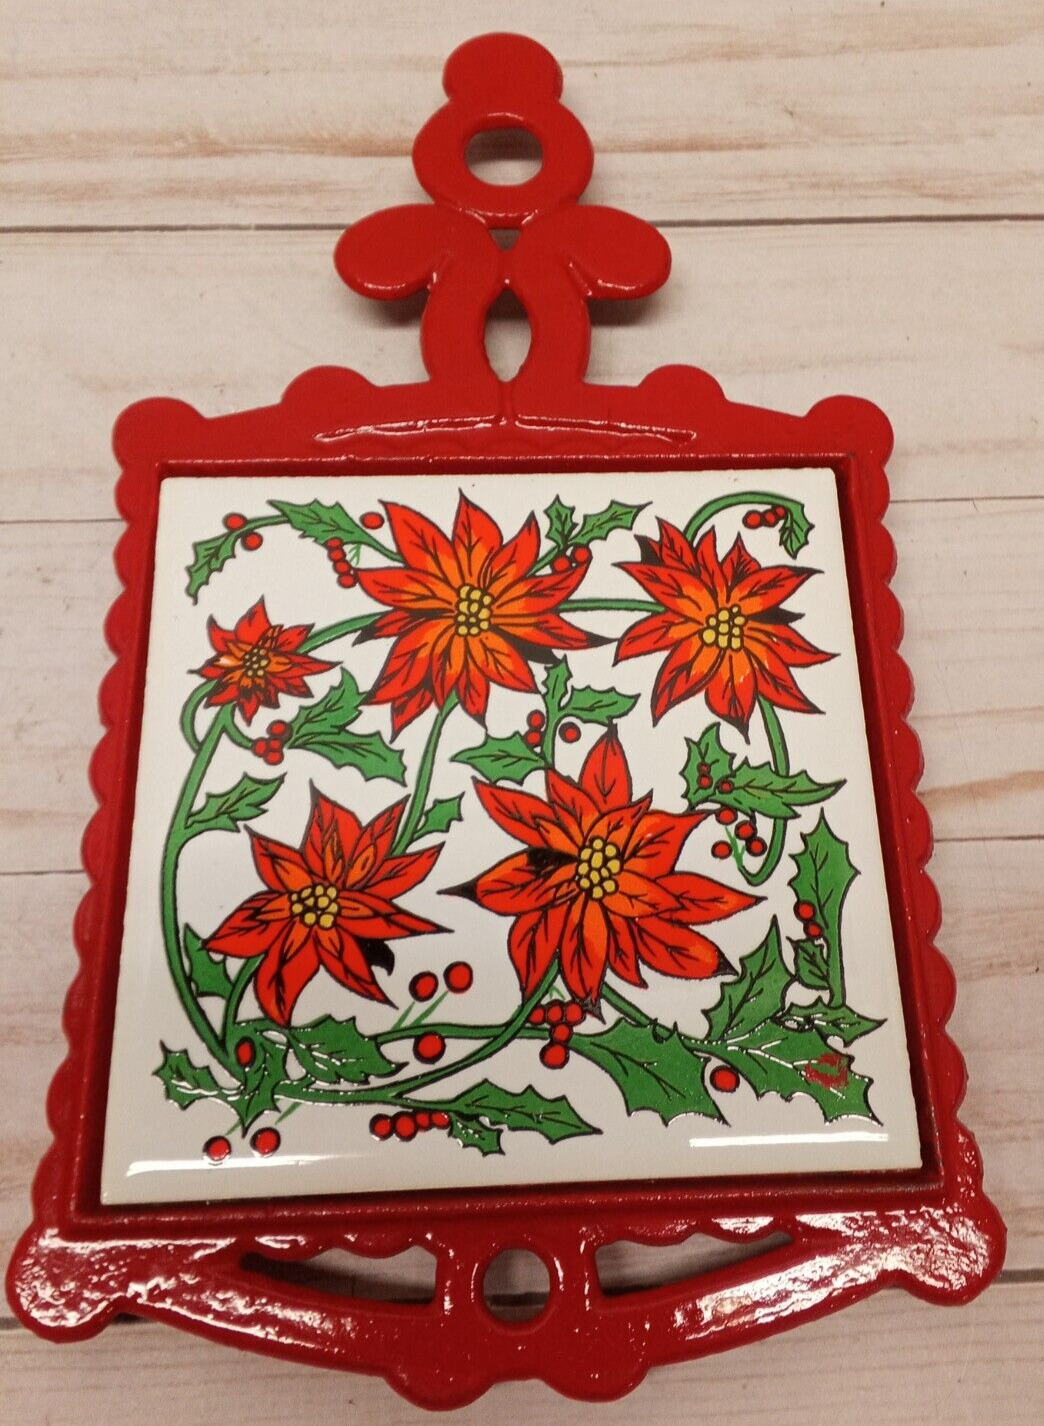 Cast Iron Handle Trivet red Poinsettia ceramic tile seven - star vintage